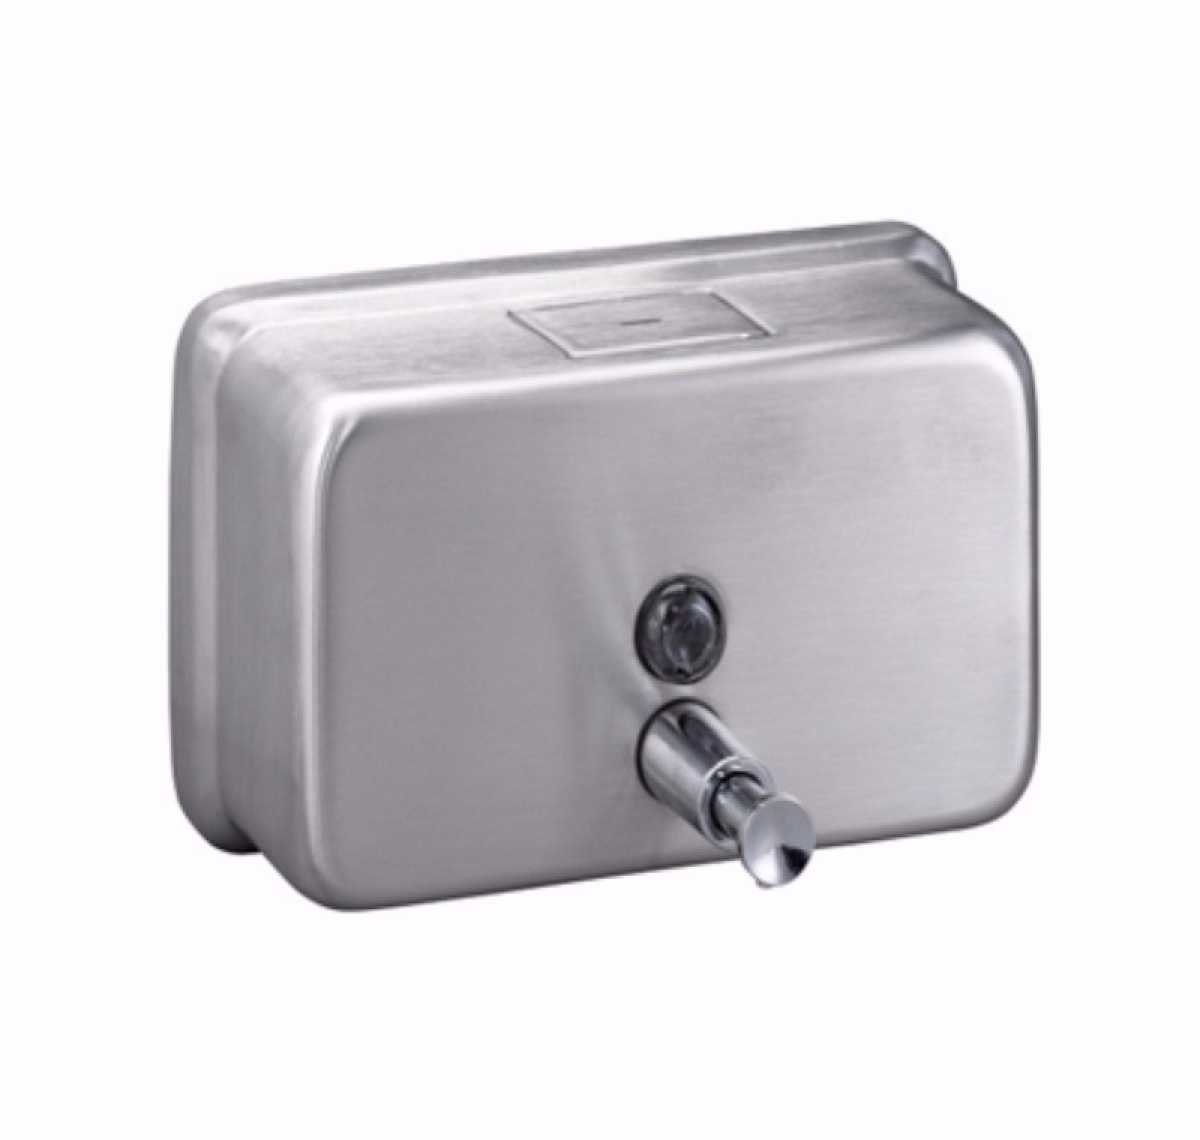  Horizontal Liquid Soap Dispenser, 1000 ml 